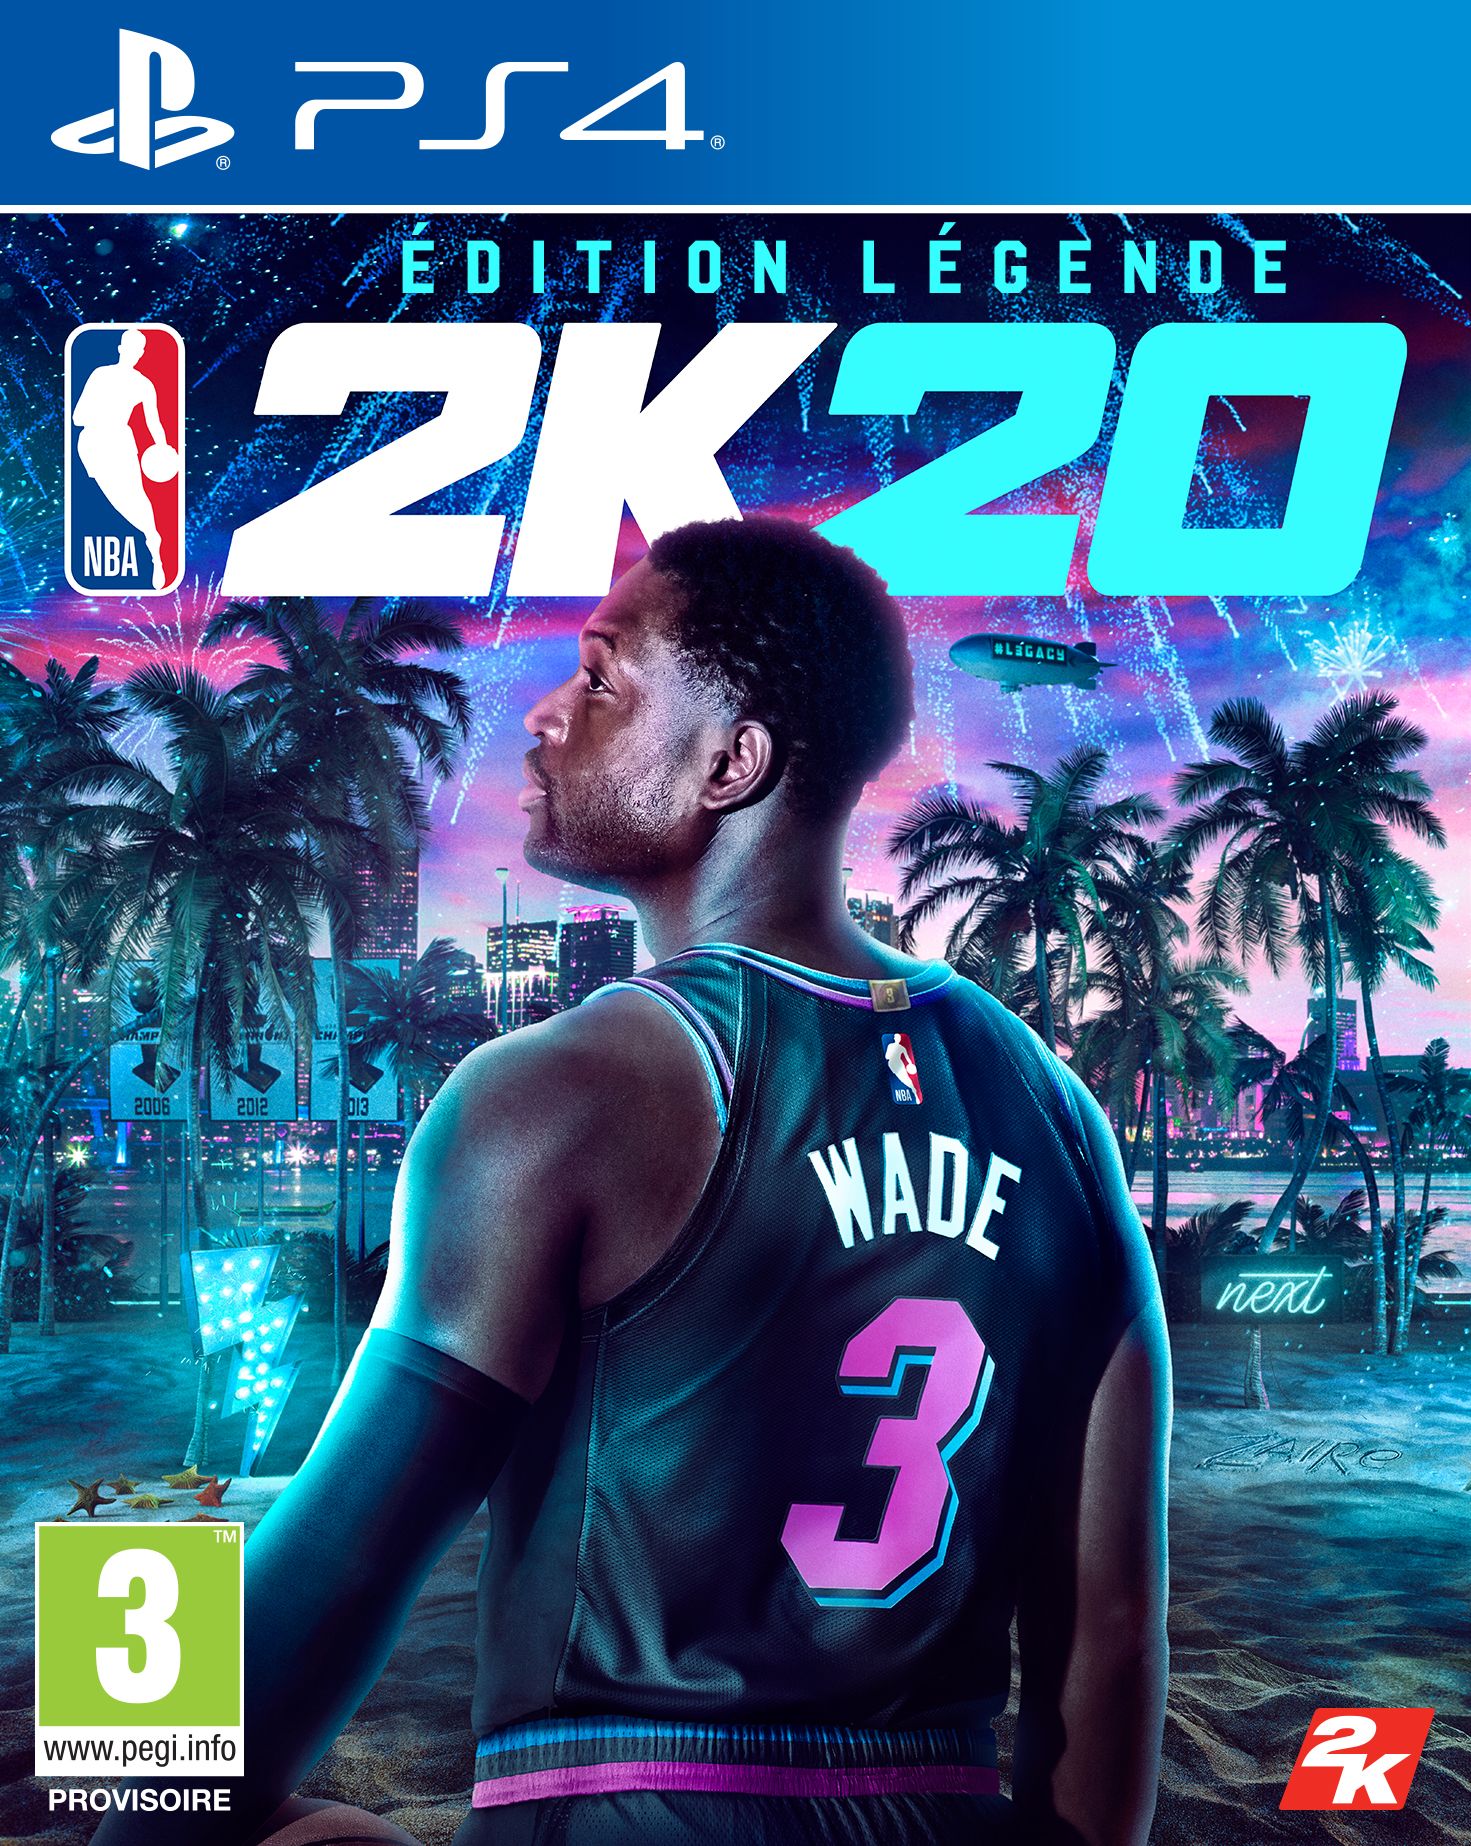 NBA 2K20 Legend Benelux Edition